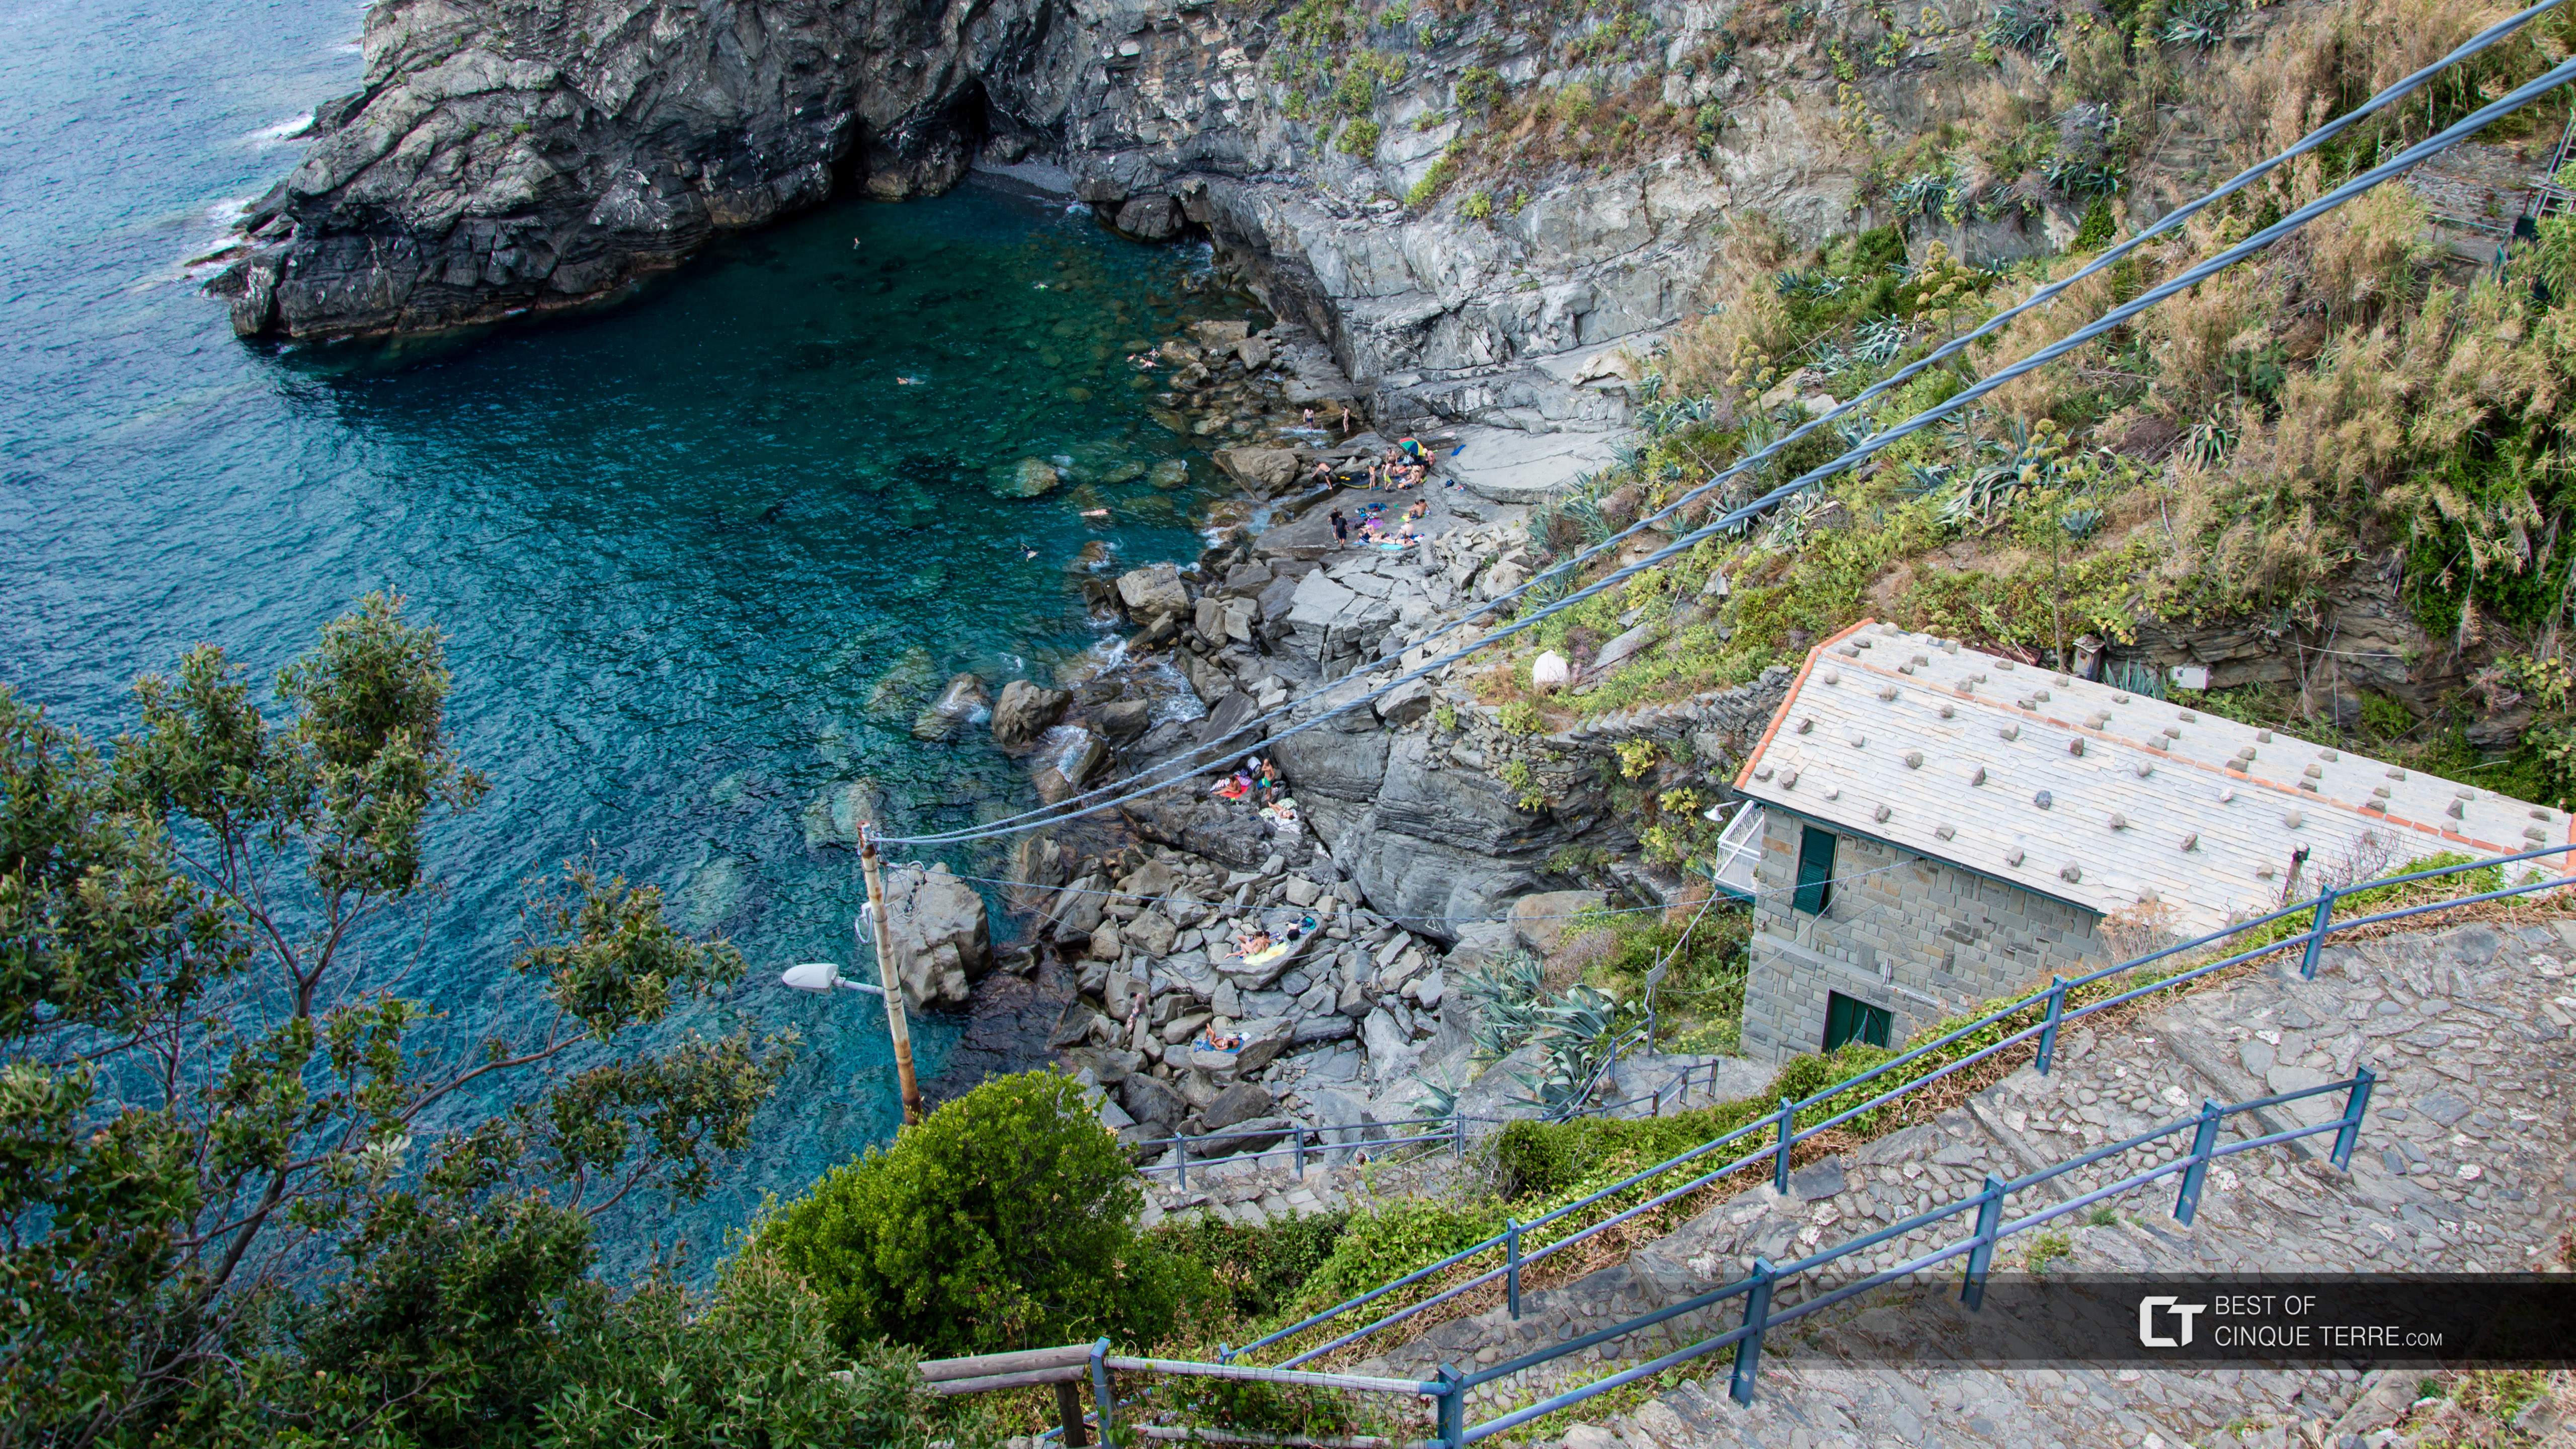 Une petite plage et la descente pour y aller, Corniglia, Cinque Terre, Italie